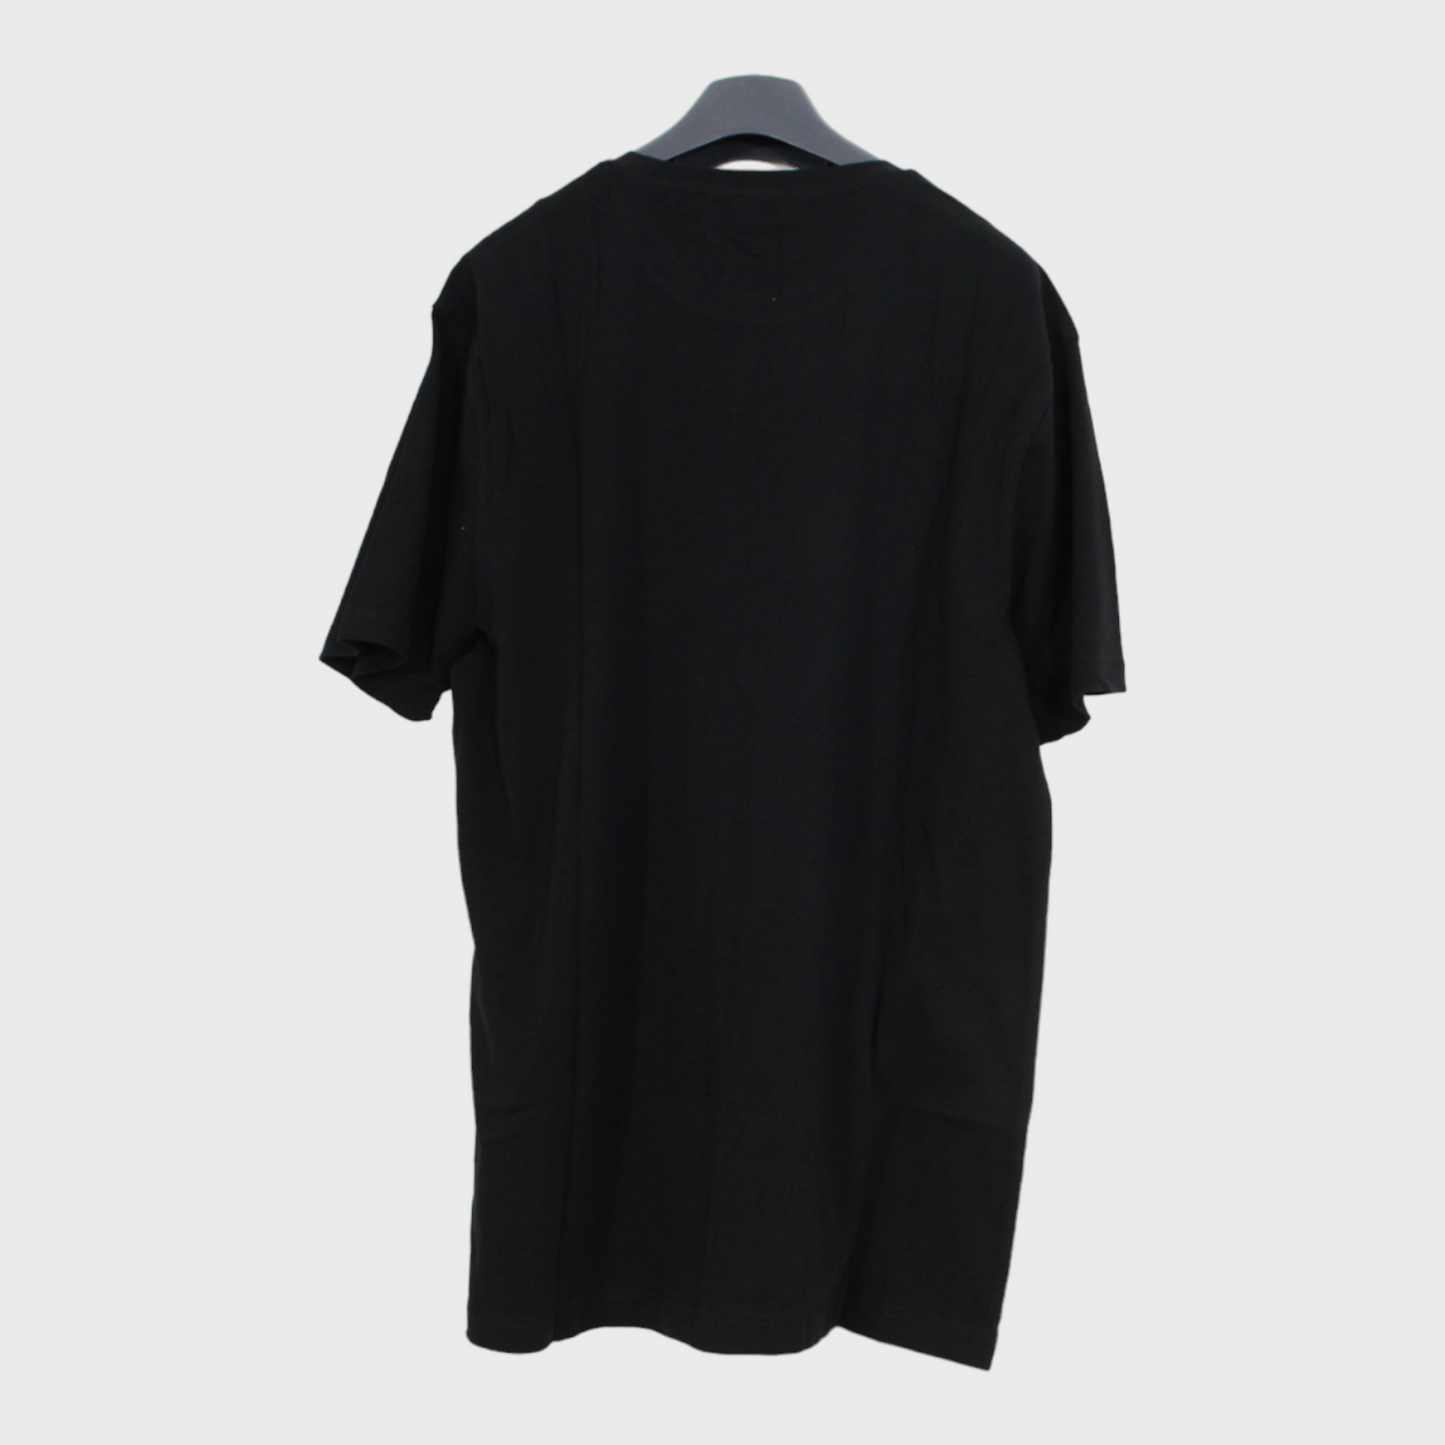 Mens Black Muscle Fit T-Shirt 2 Pack XL